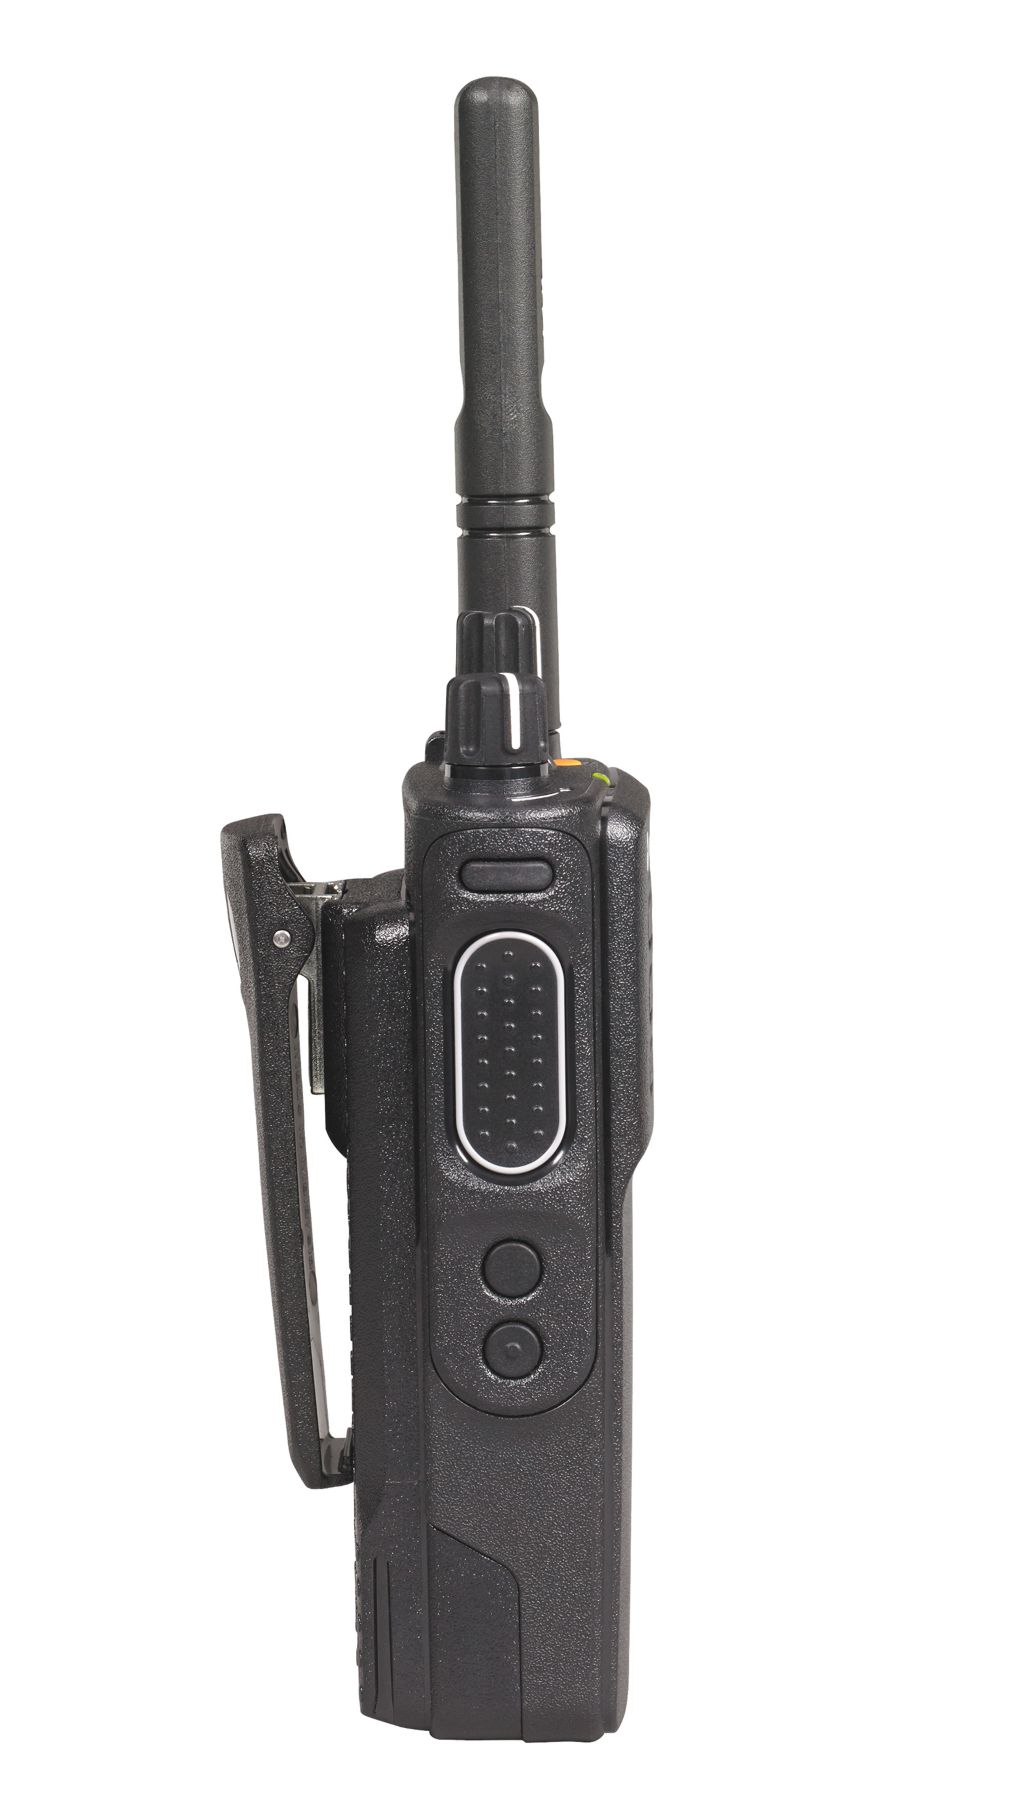 Motorola MOTOTRBO DP4401e WLAN Bluetooth GPS UHF 403-527 MHz without accessories MDH56RDC9RA1AN